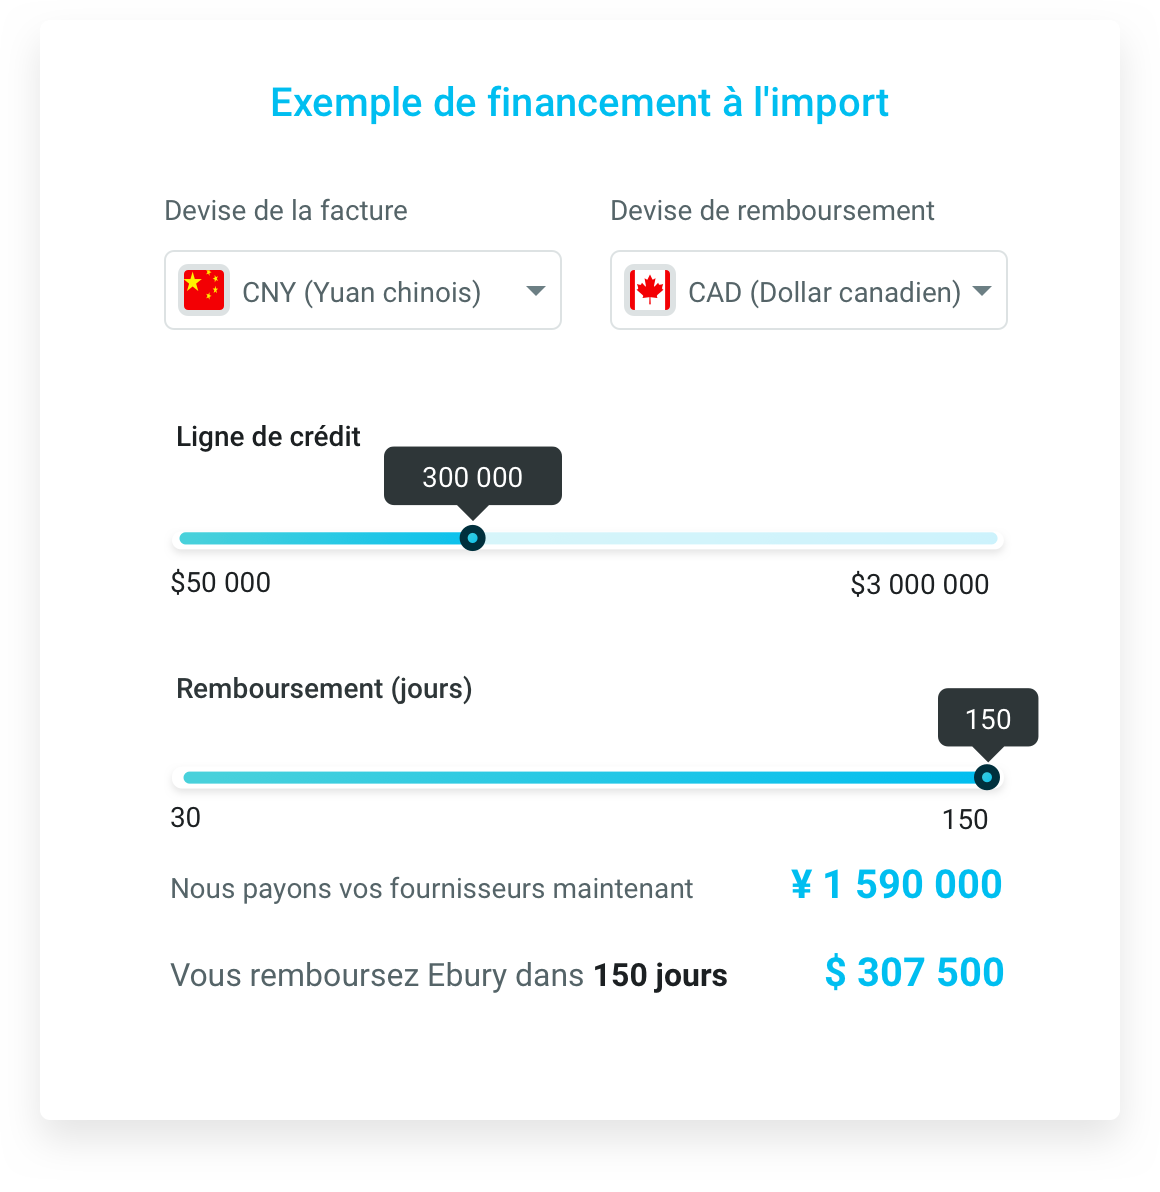 Import finance example